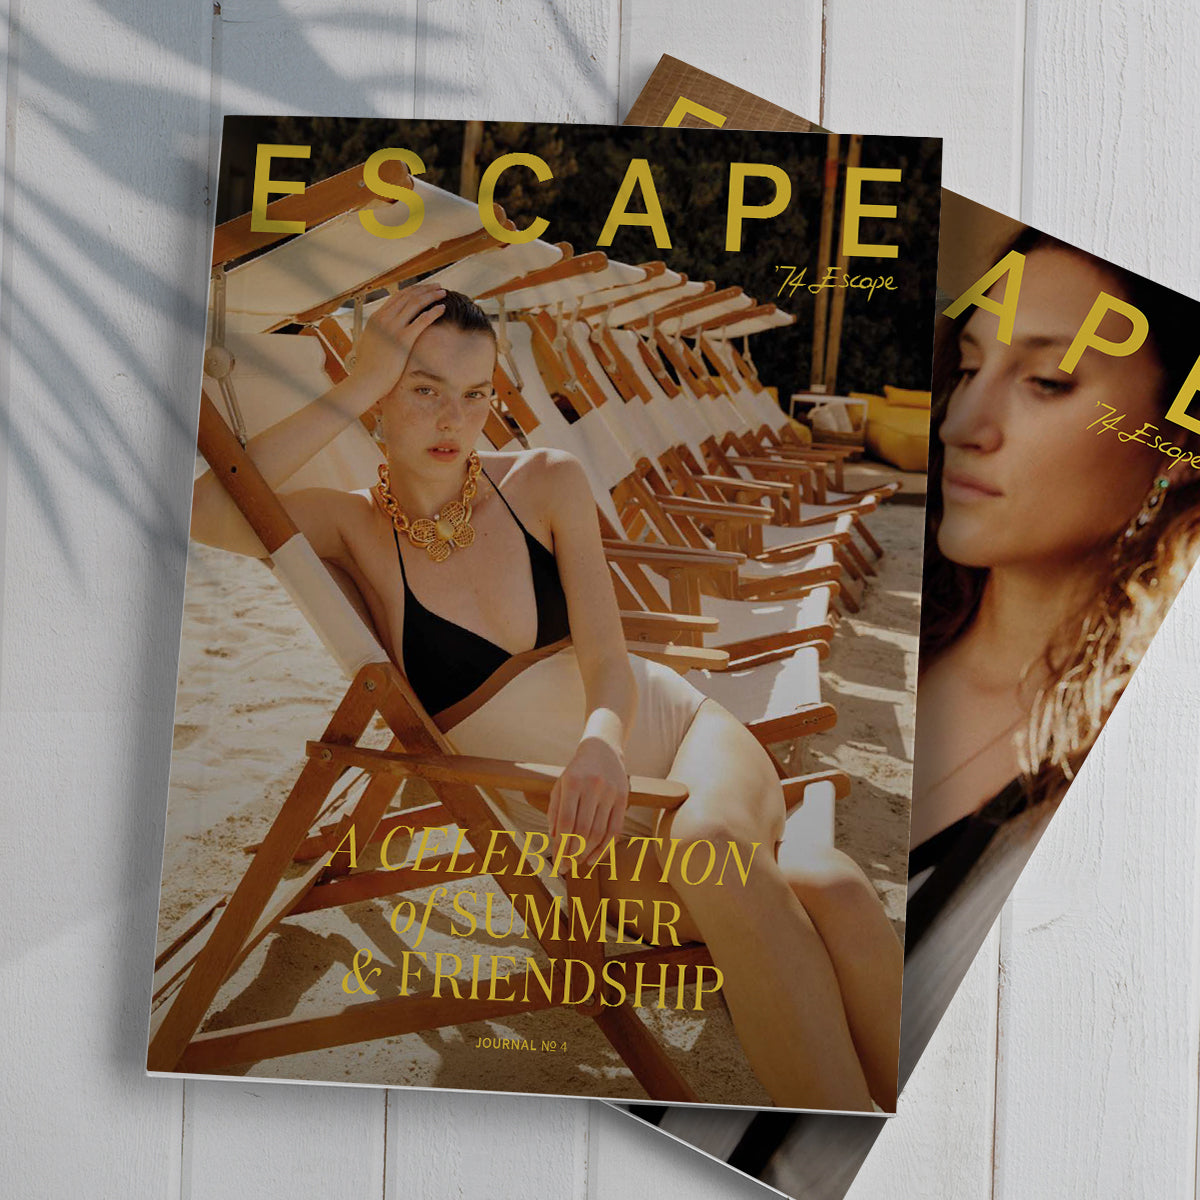 Bundle - Escape Magazine No.4 - Special Edition & Escape AI Issue No.1 - The Valley '74